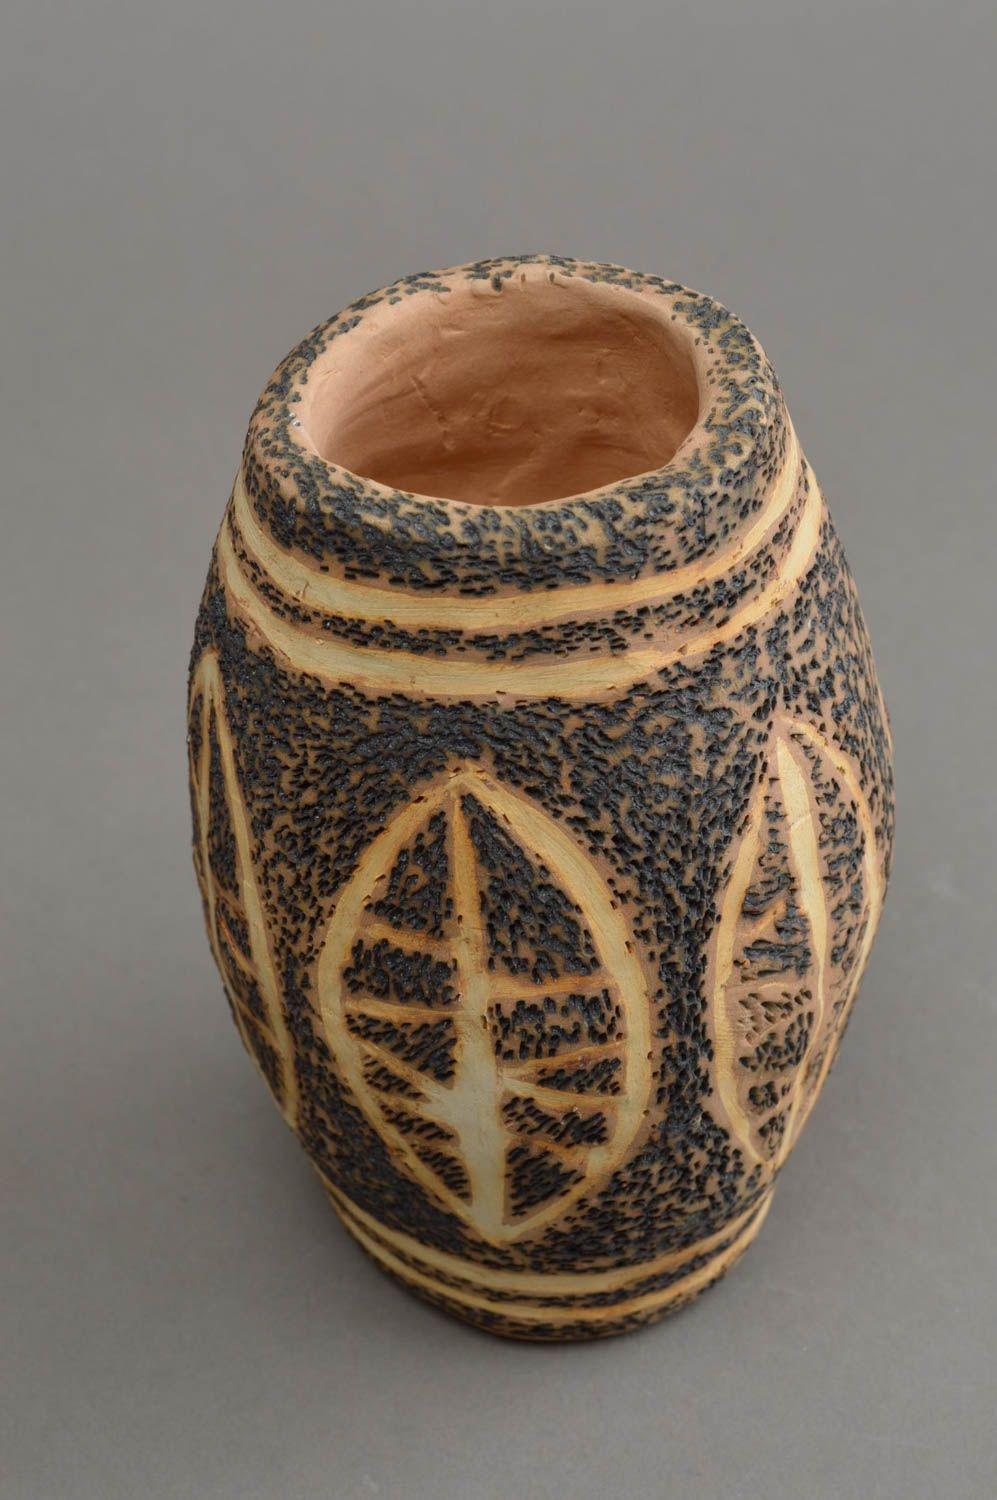 Originelle Miniatur Vase aus Ton mit Glasur bemalt handmade im Ethno Stil foto 2